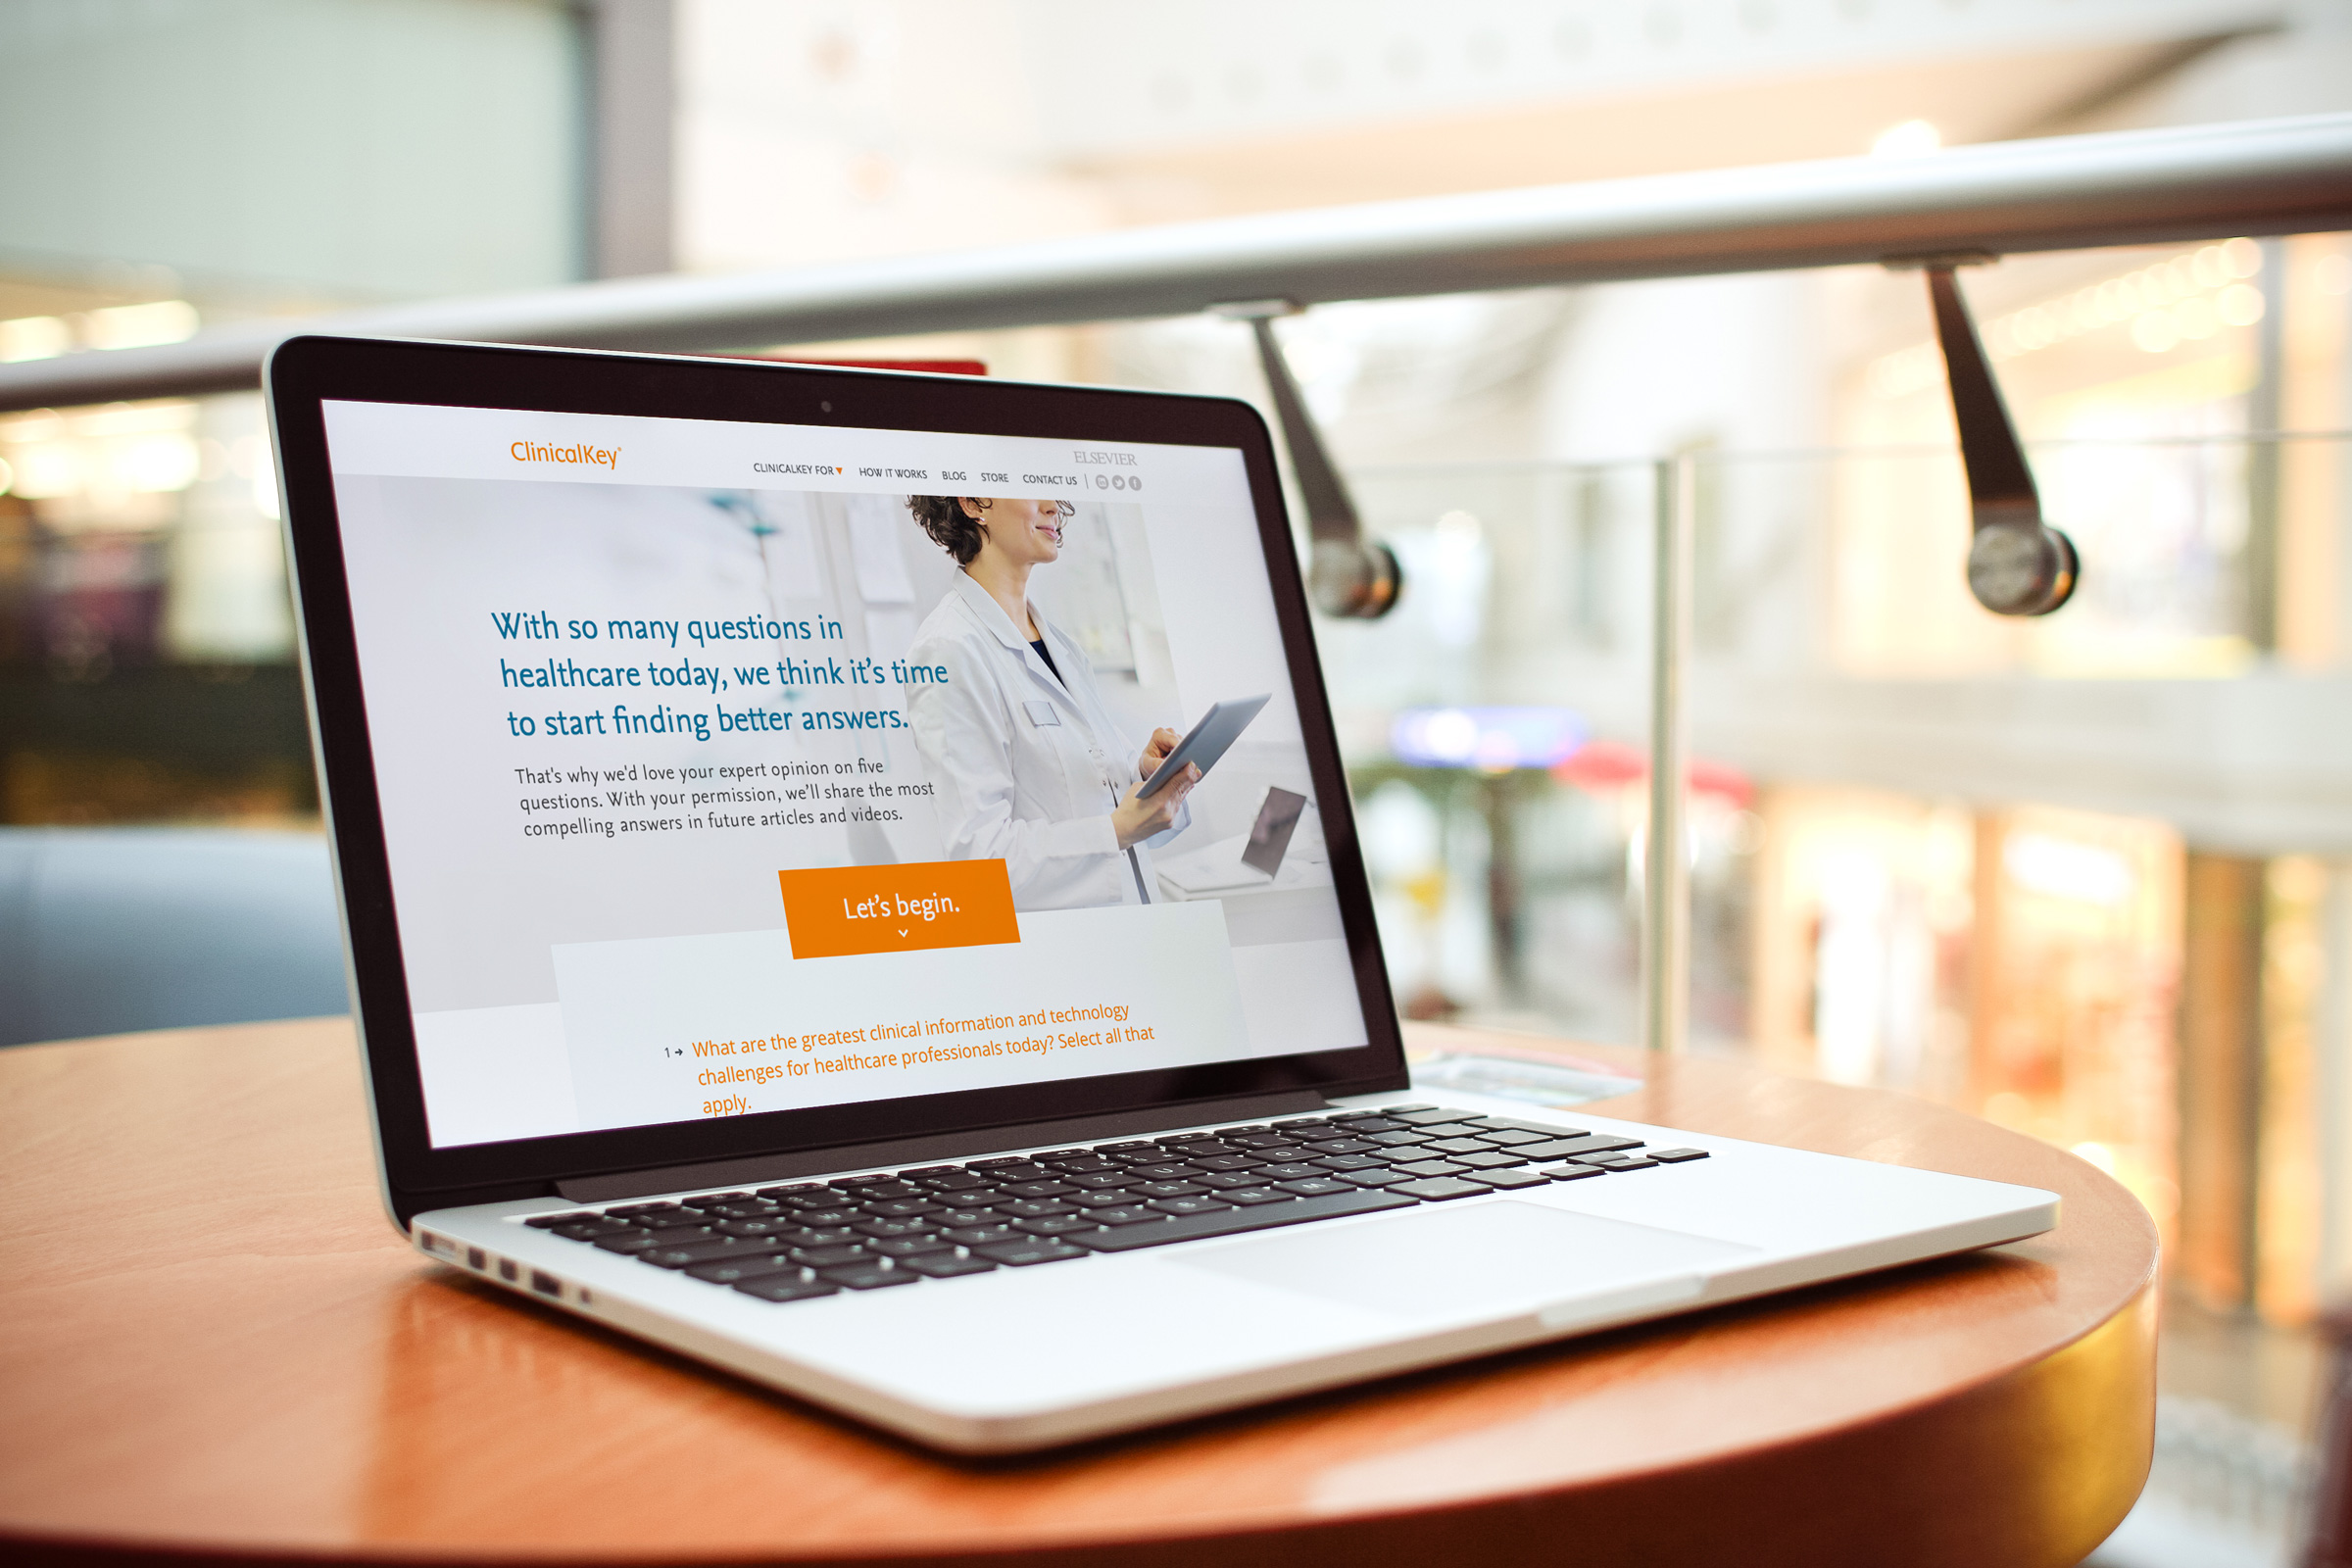 Branding and website design for Elsevier's ClinicalKey